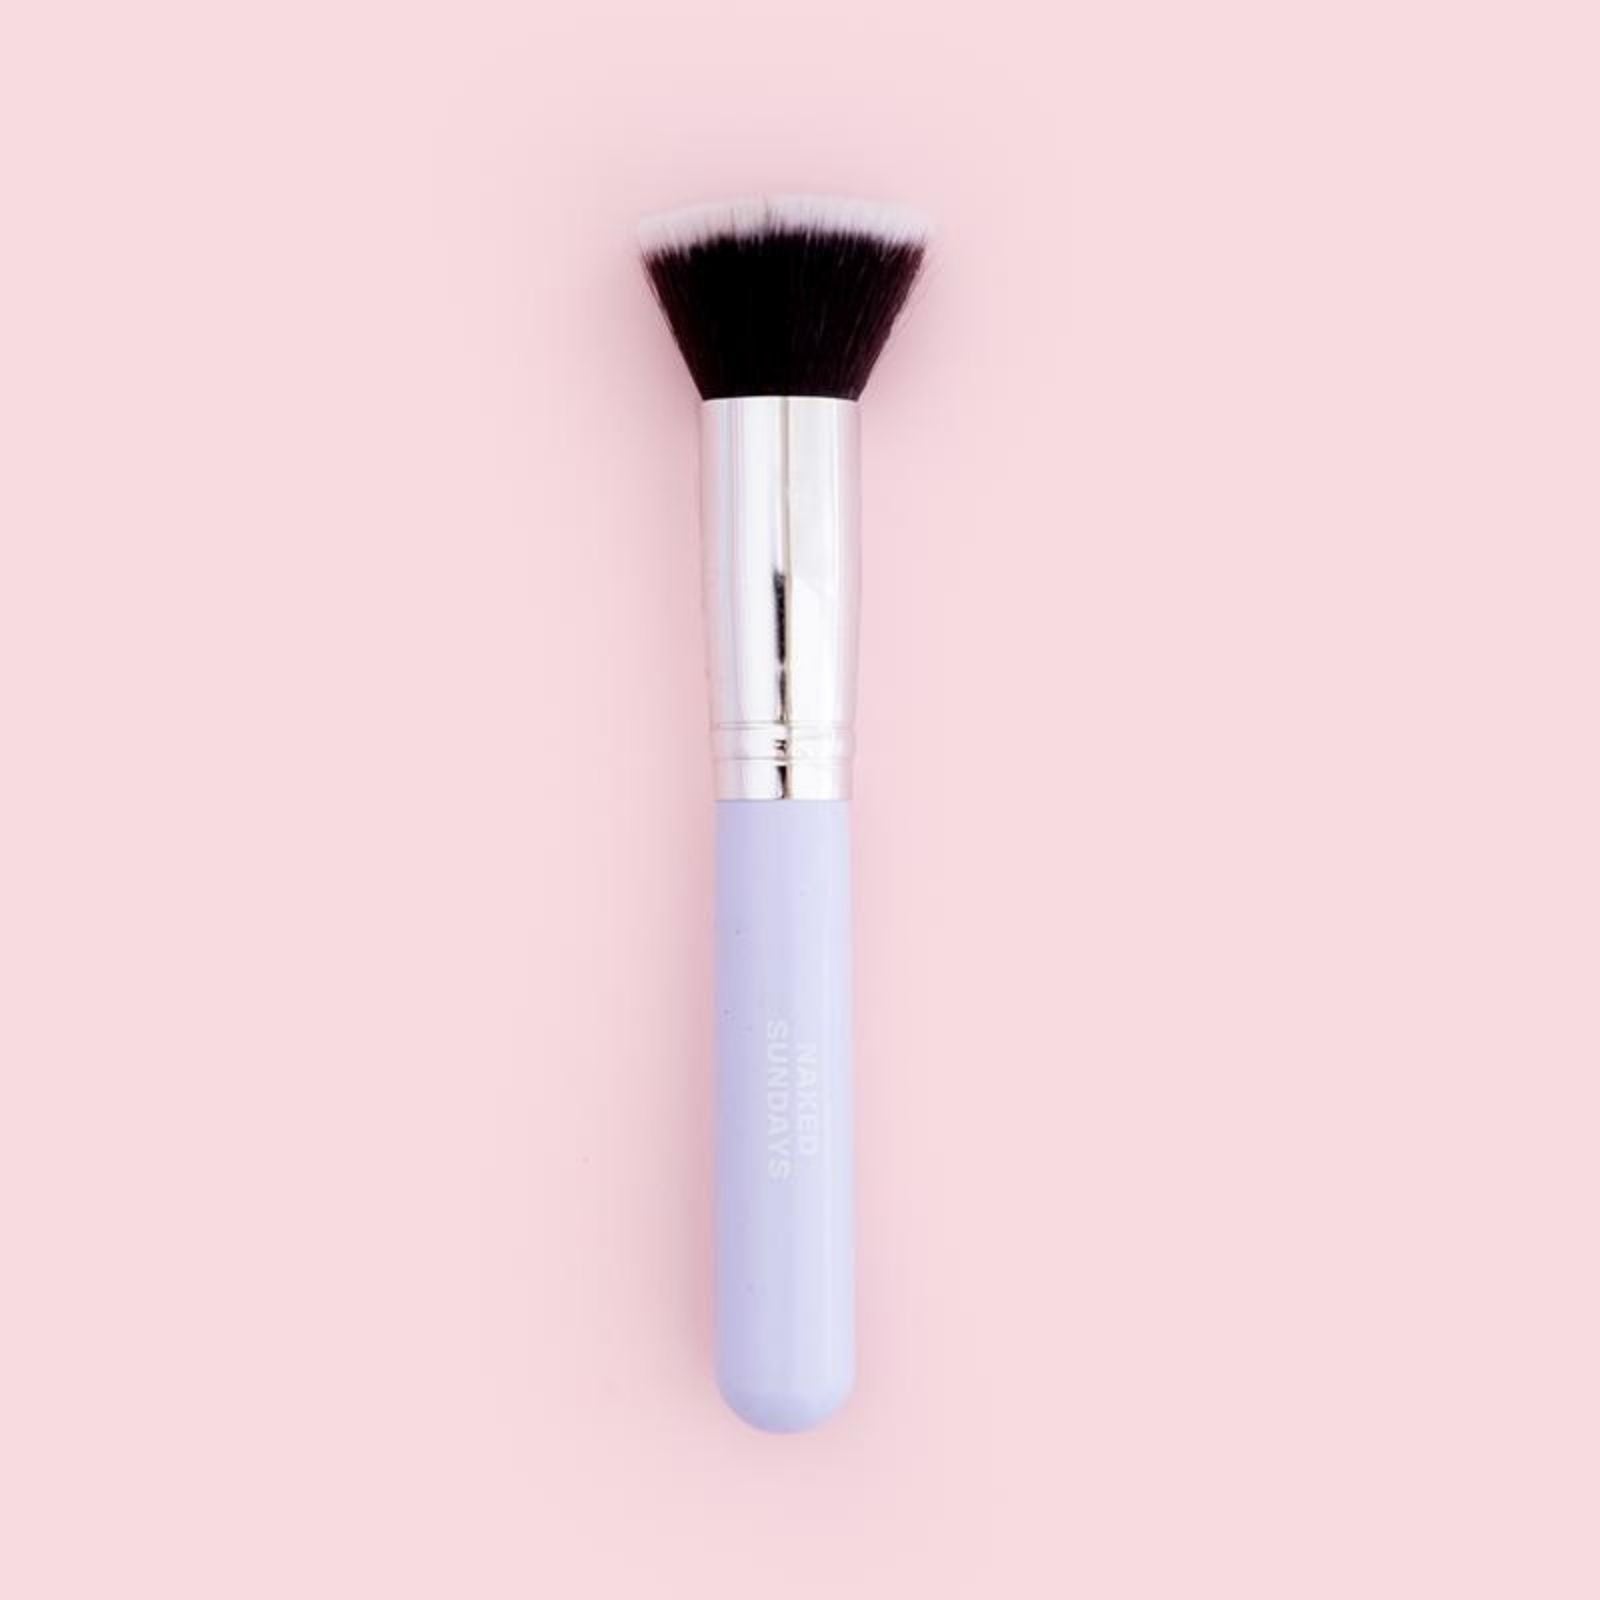 SPF Makeup Brush on Pink background